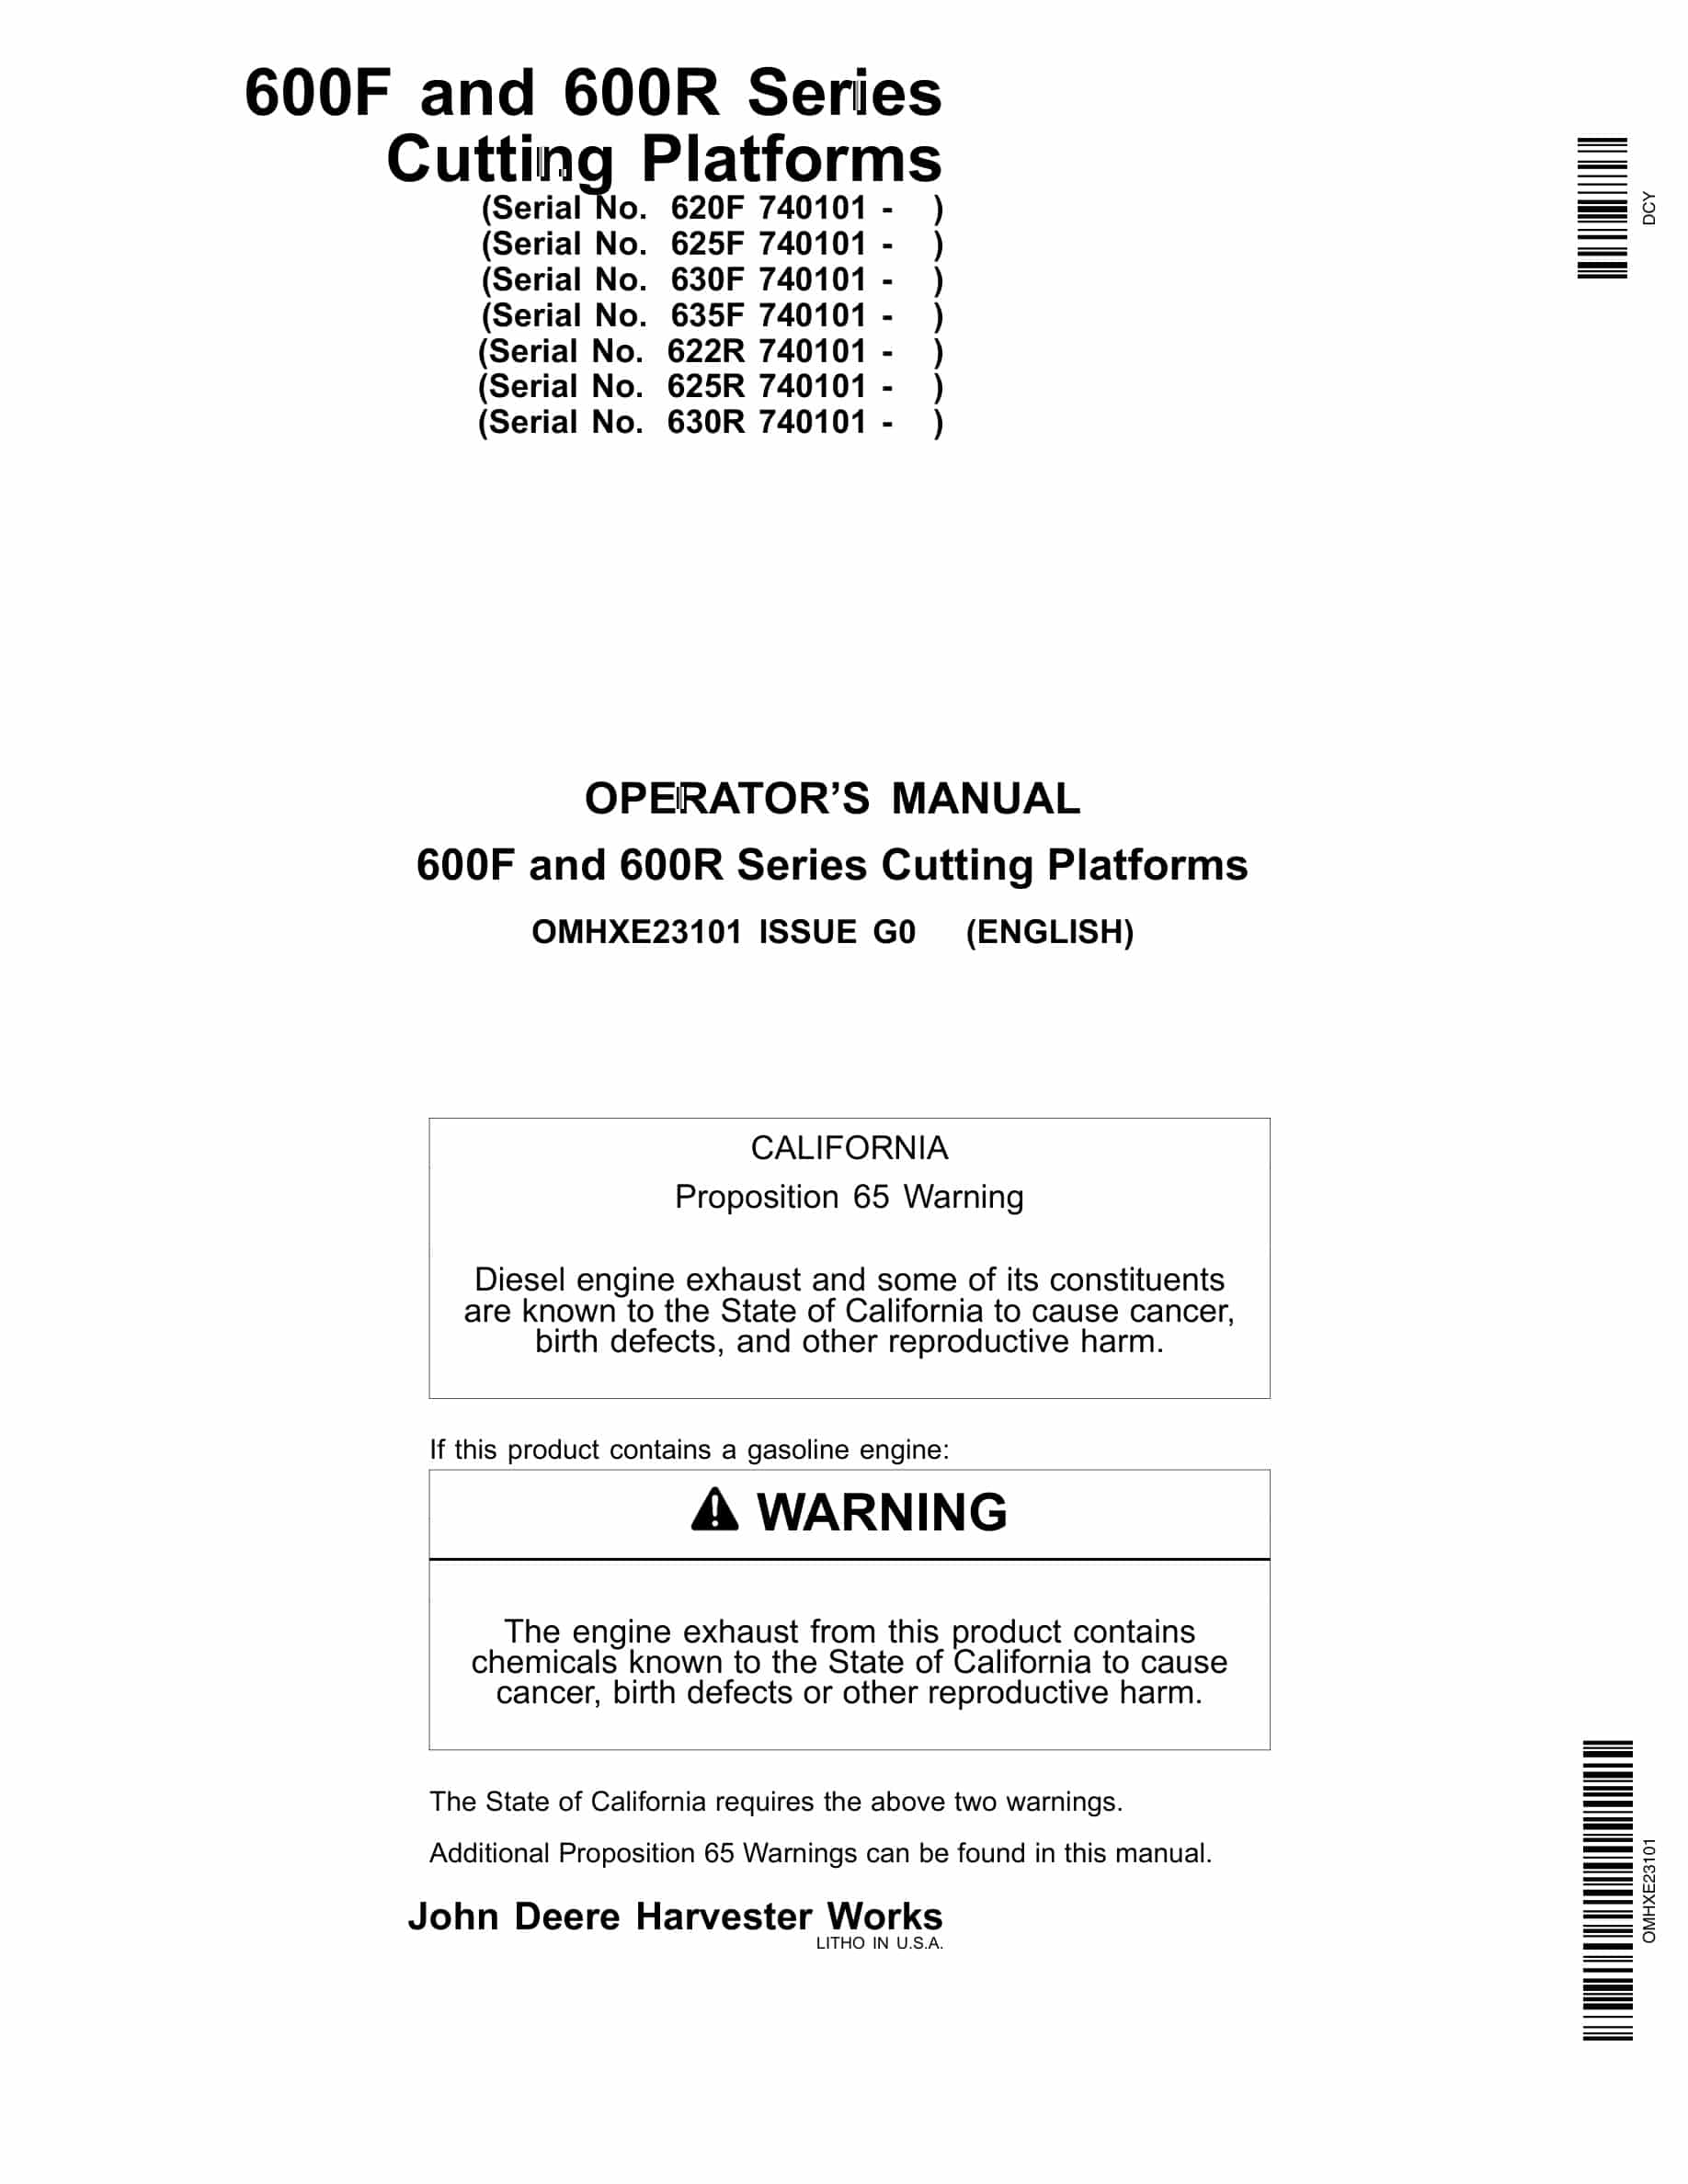 John Deere 600 F and 600 R Series Cutting Platforms Operator Manual OMHXE23101-1